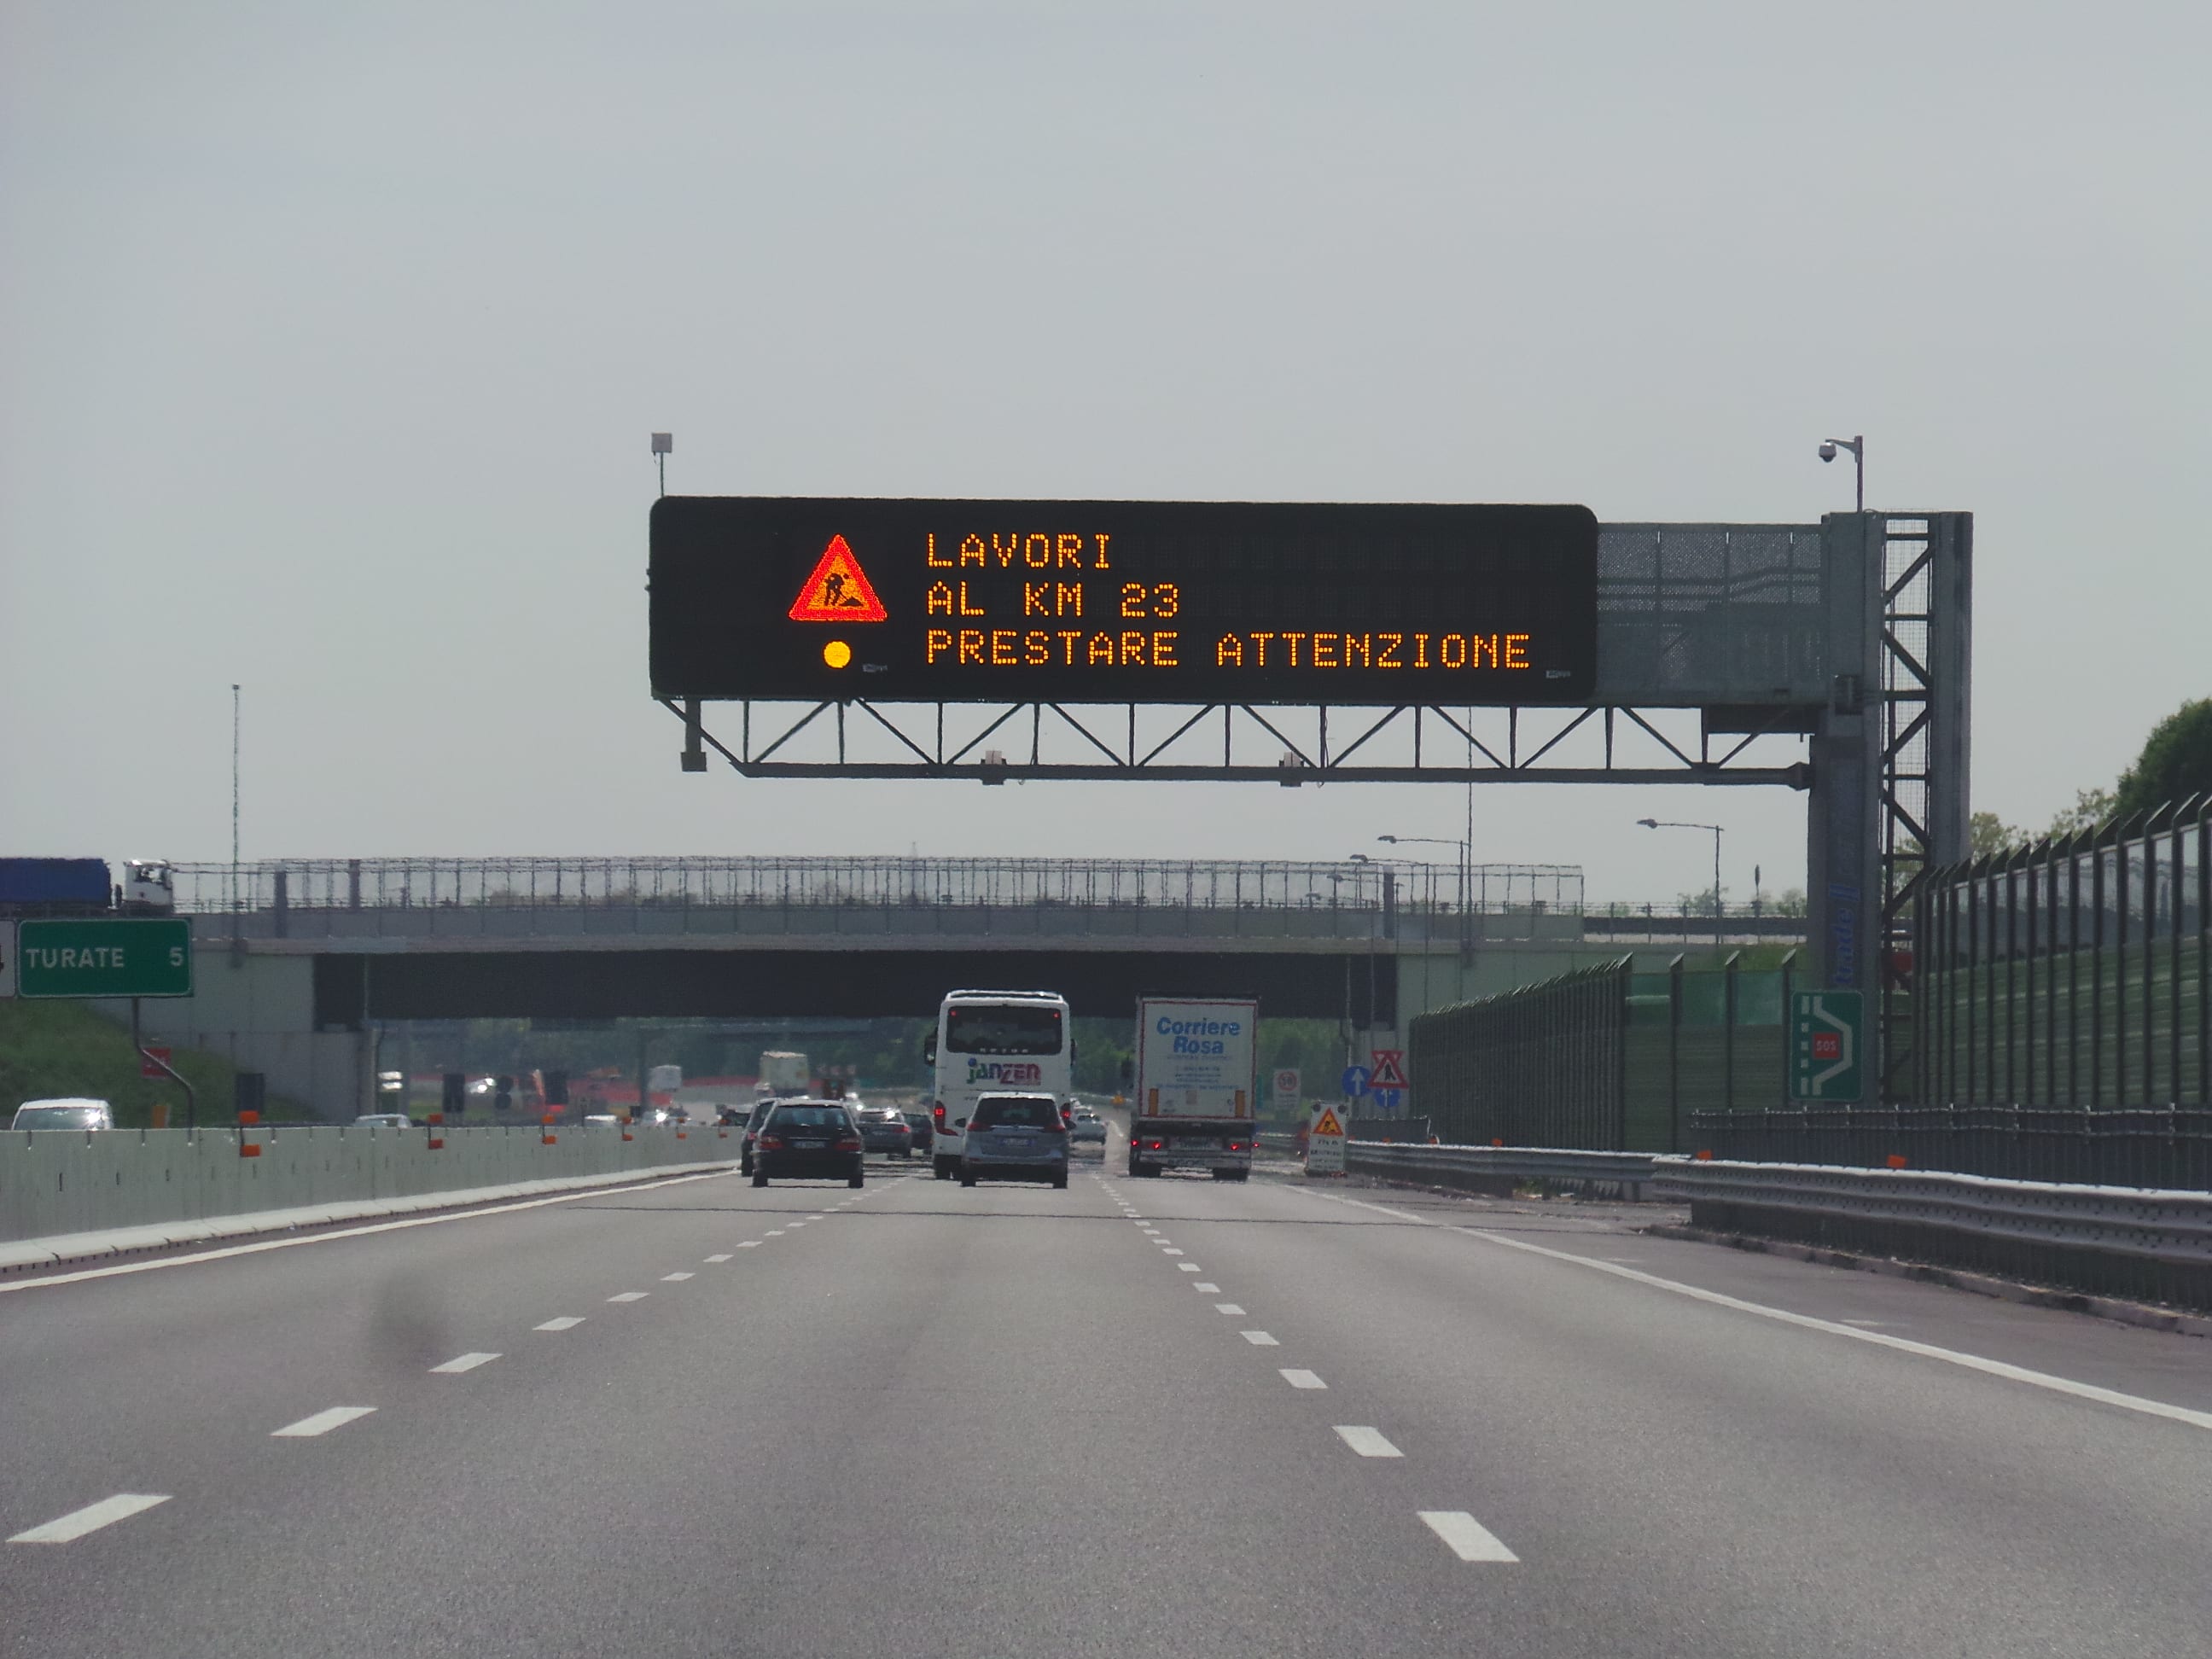 Uscita autostrada A8 chiusa per manutenzione: orari e alternative